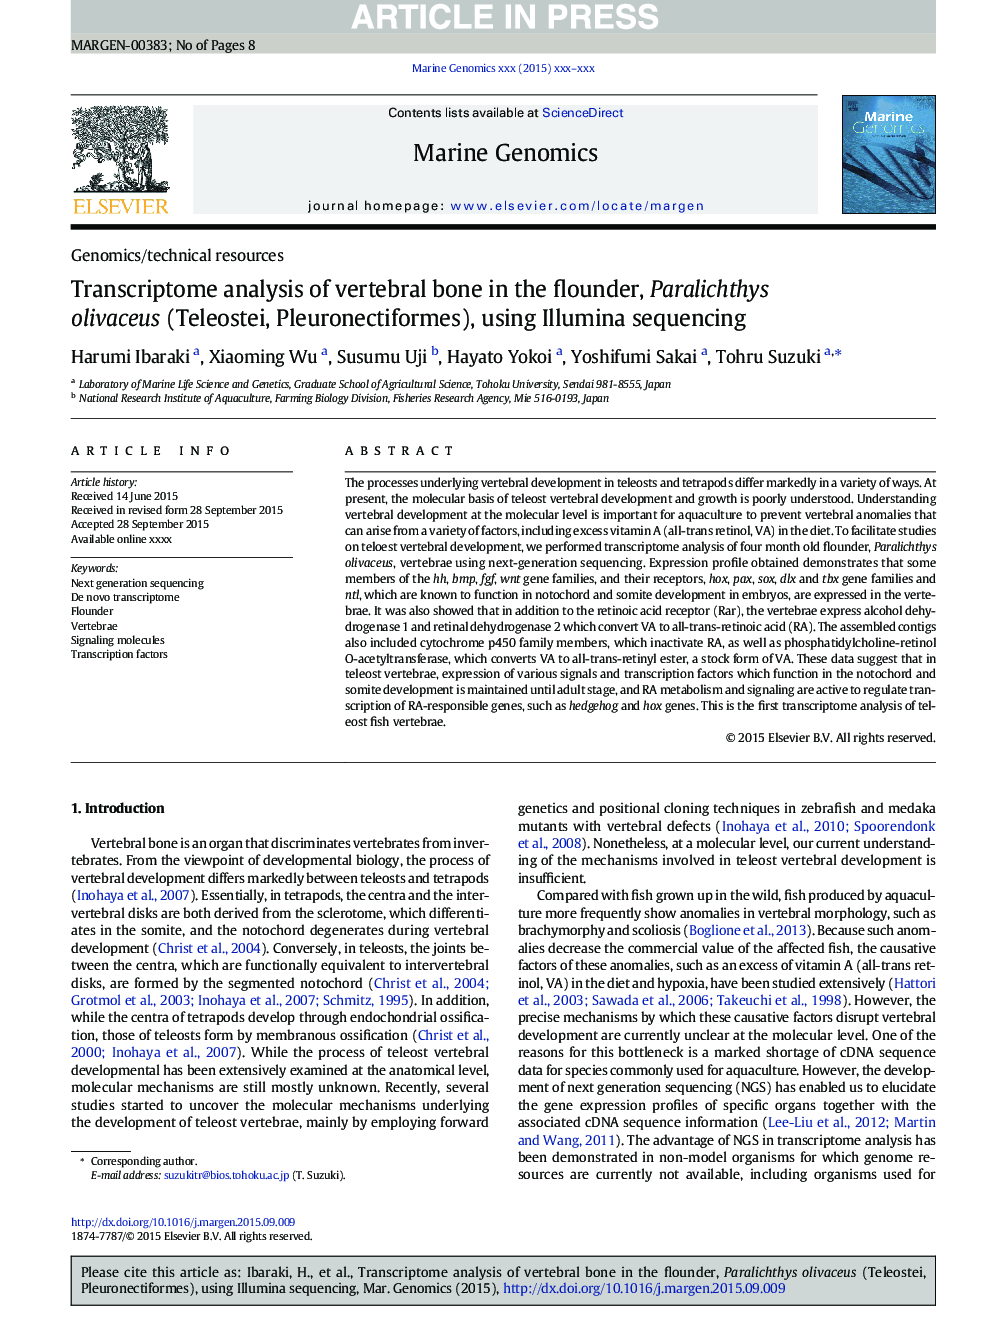 Transcriptome analysis of vertebral bone in the flounder, Paralichthys olivaceus (Teleostei, Pleuronectiformes), using Illumina sequencing